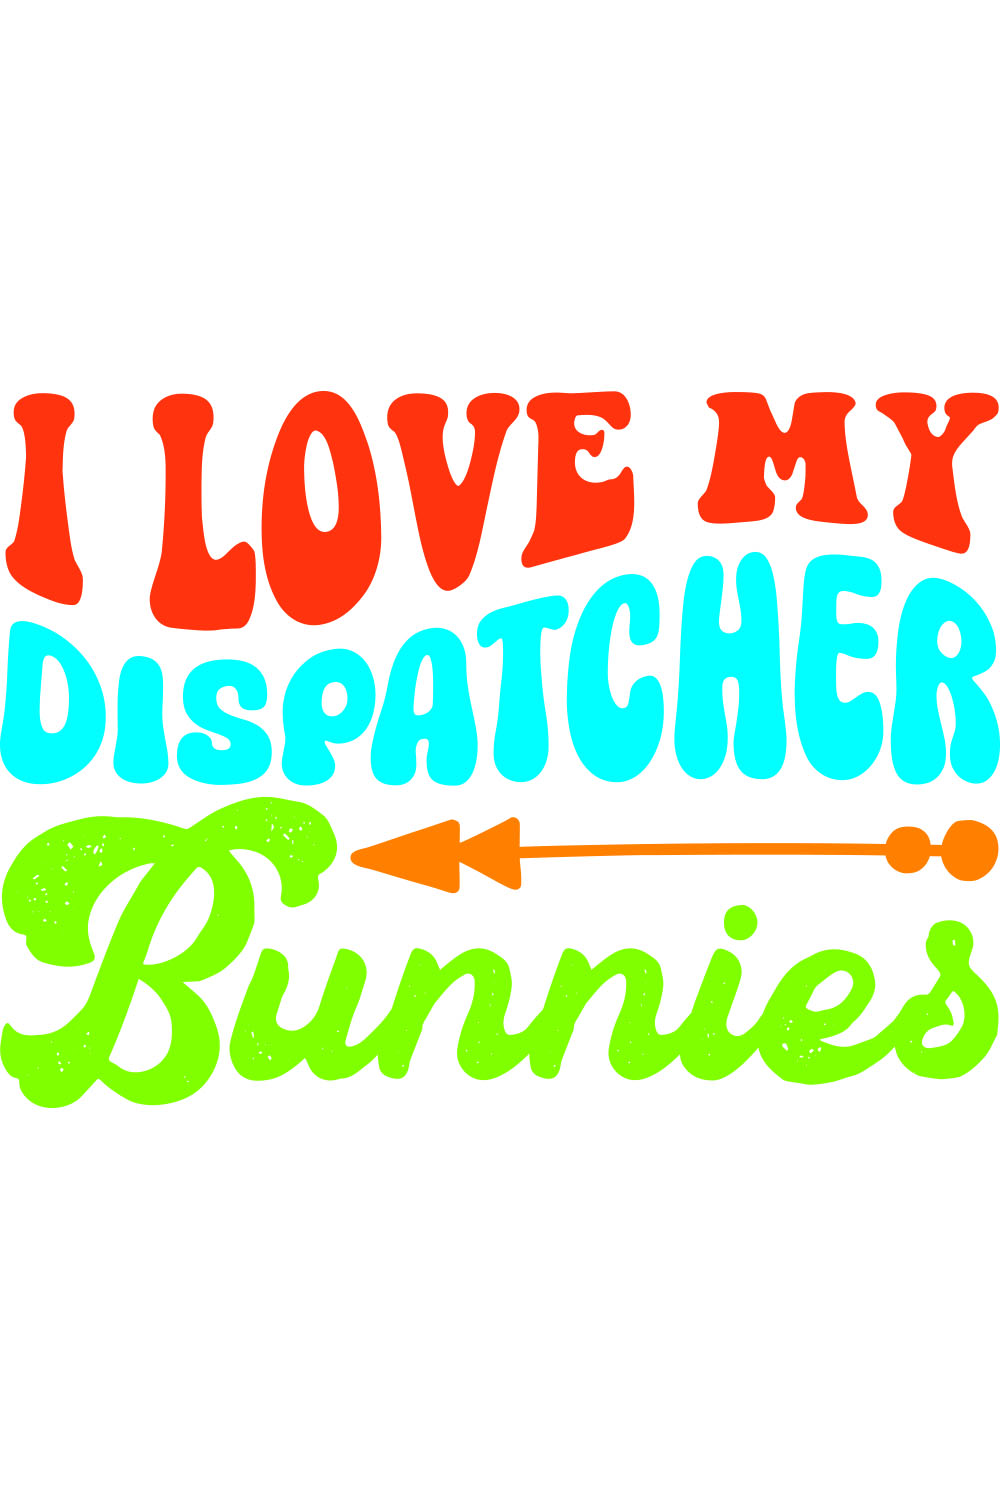 I Love My Dispatcher Bunnies pinterest preview image.